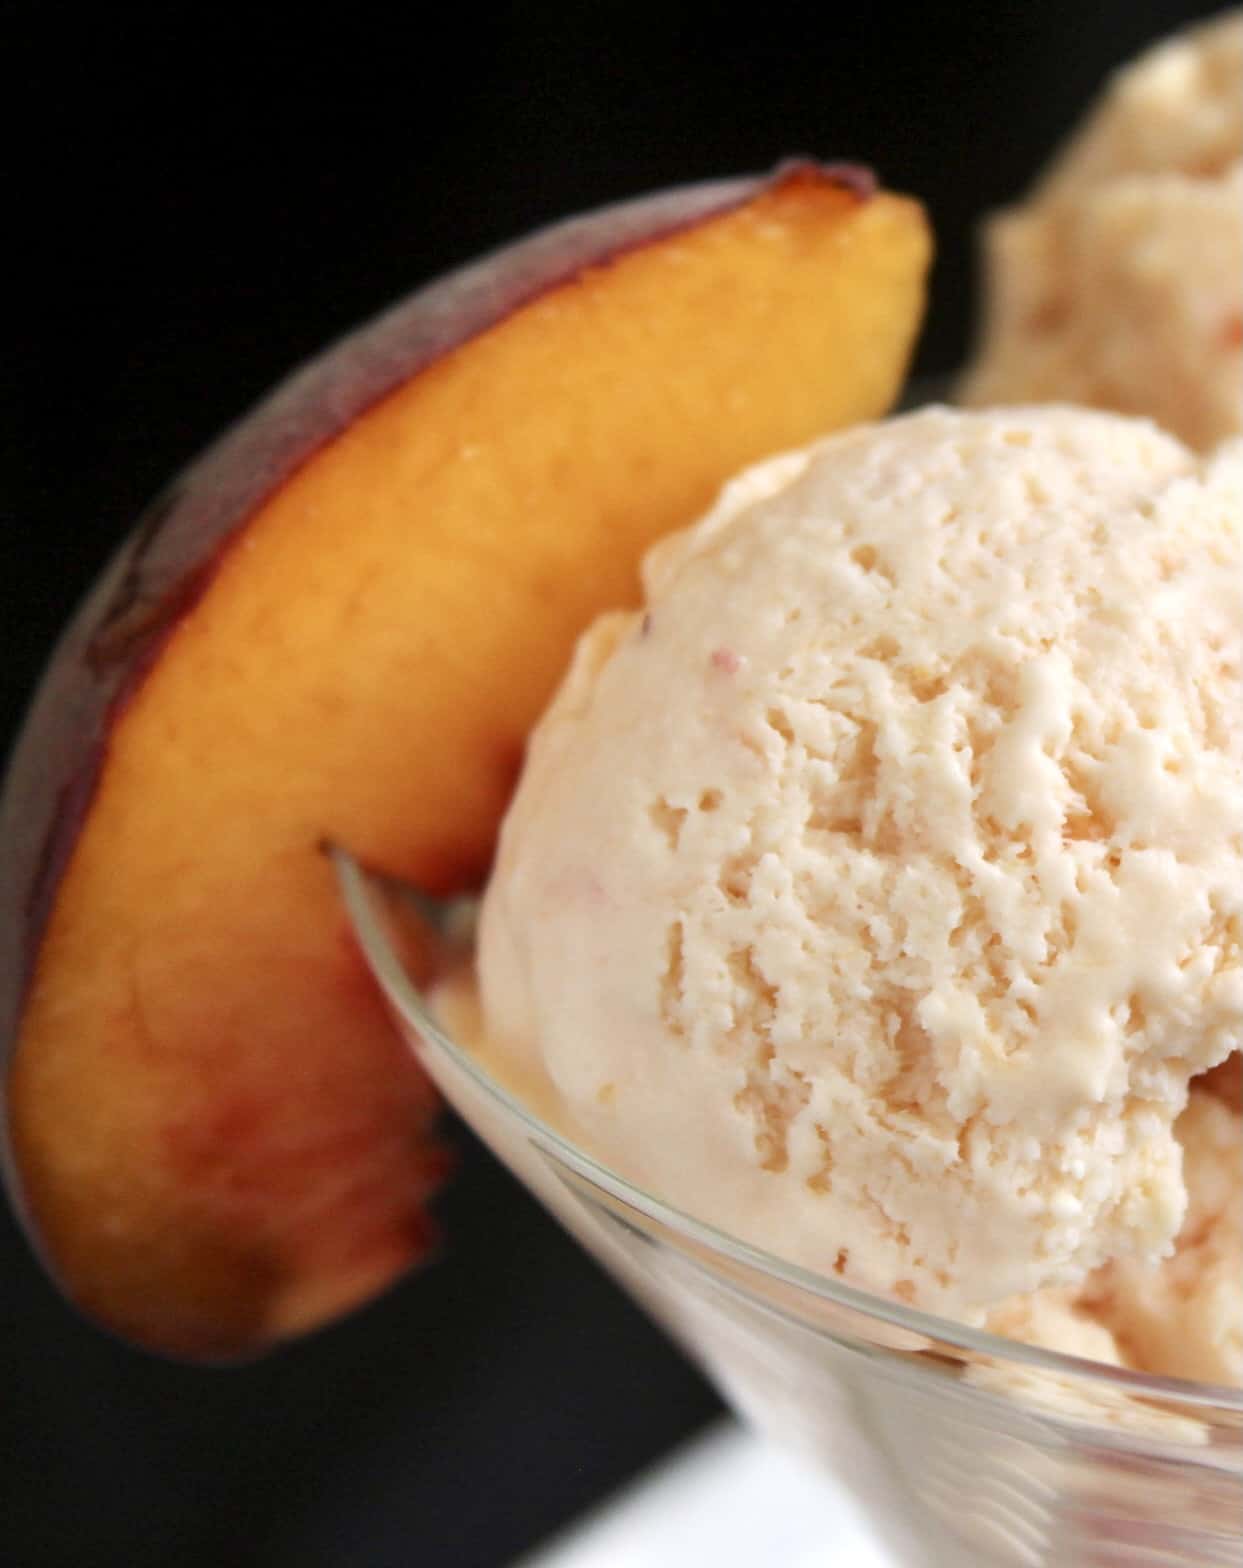 close up of peach ice cream and slice of peach